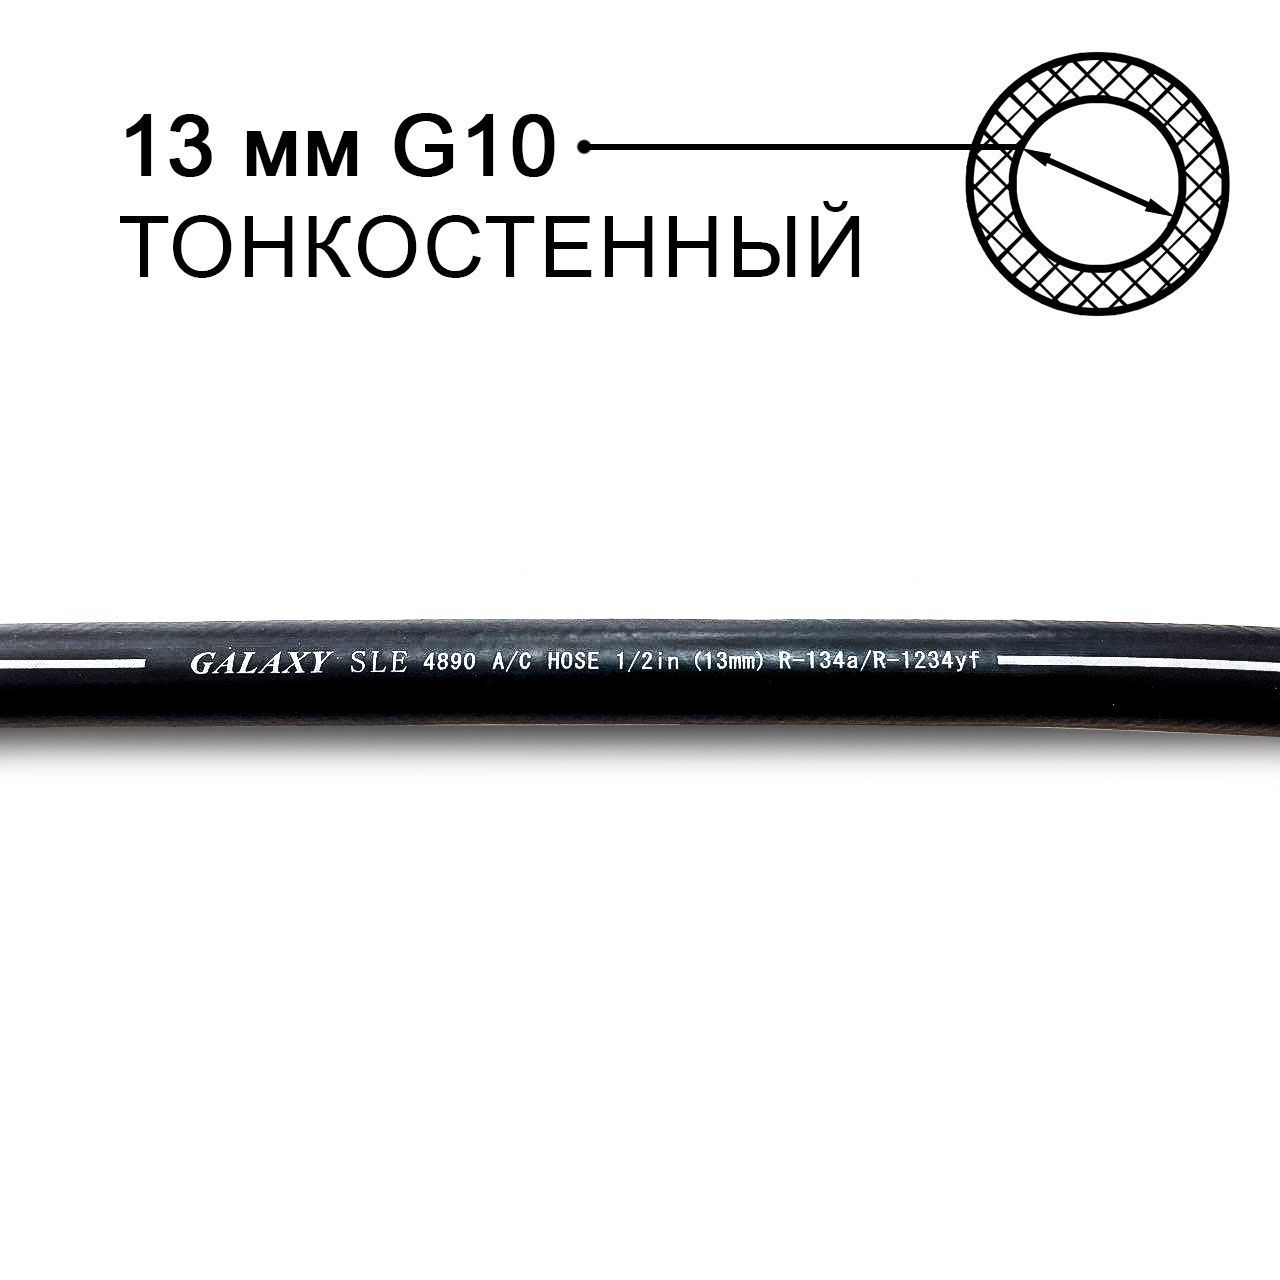 Шланг Galaxy 13 мм (G10) 1/2 4890